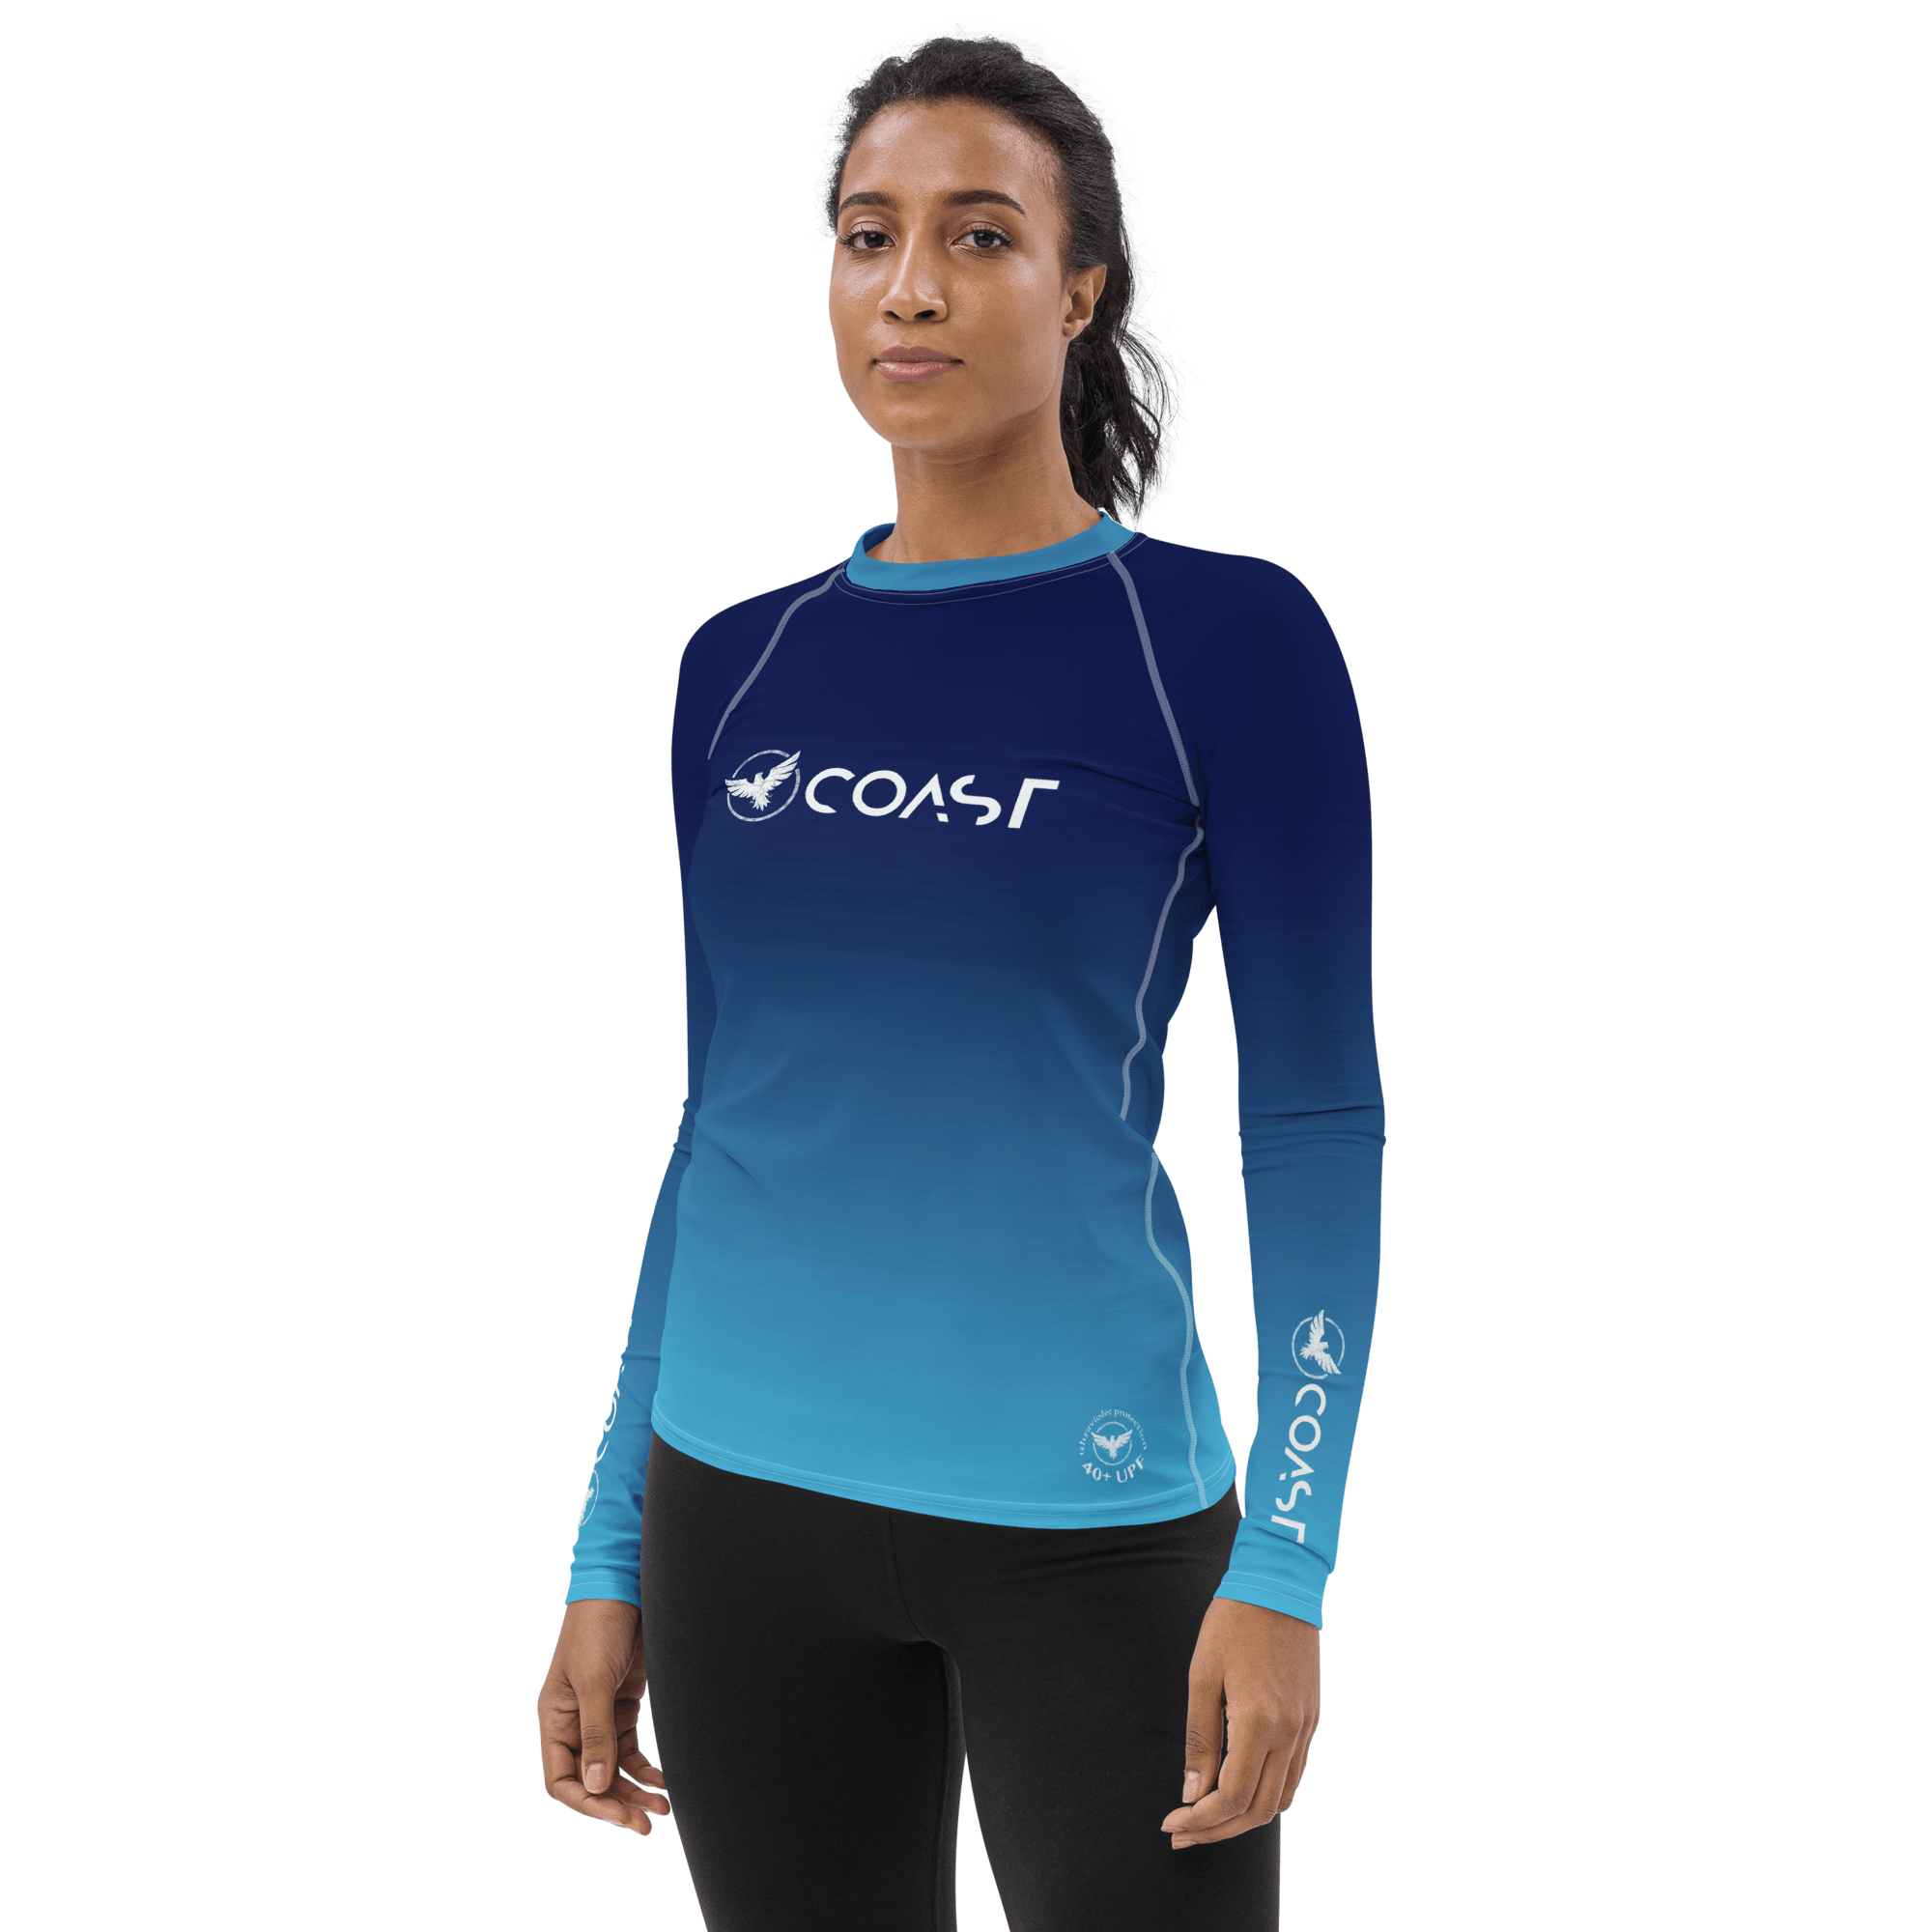 Women's Ocean Fade Sleeve Performance Rash Guard UPF 40+